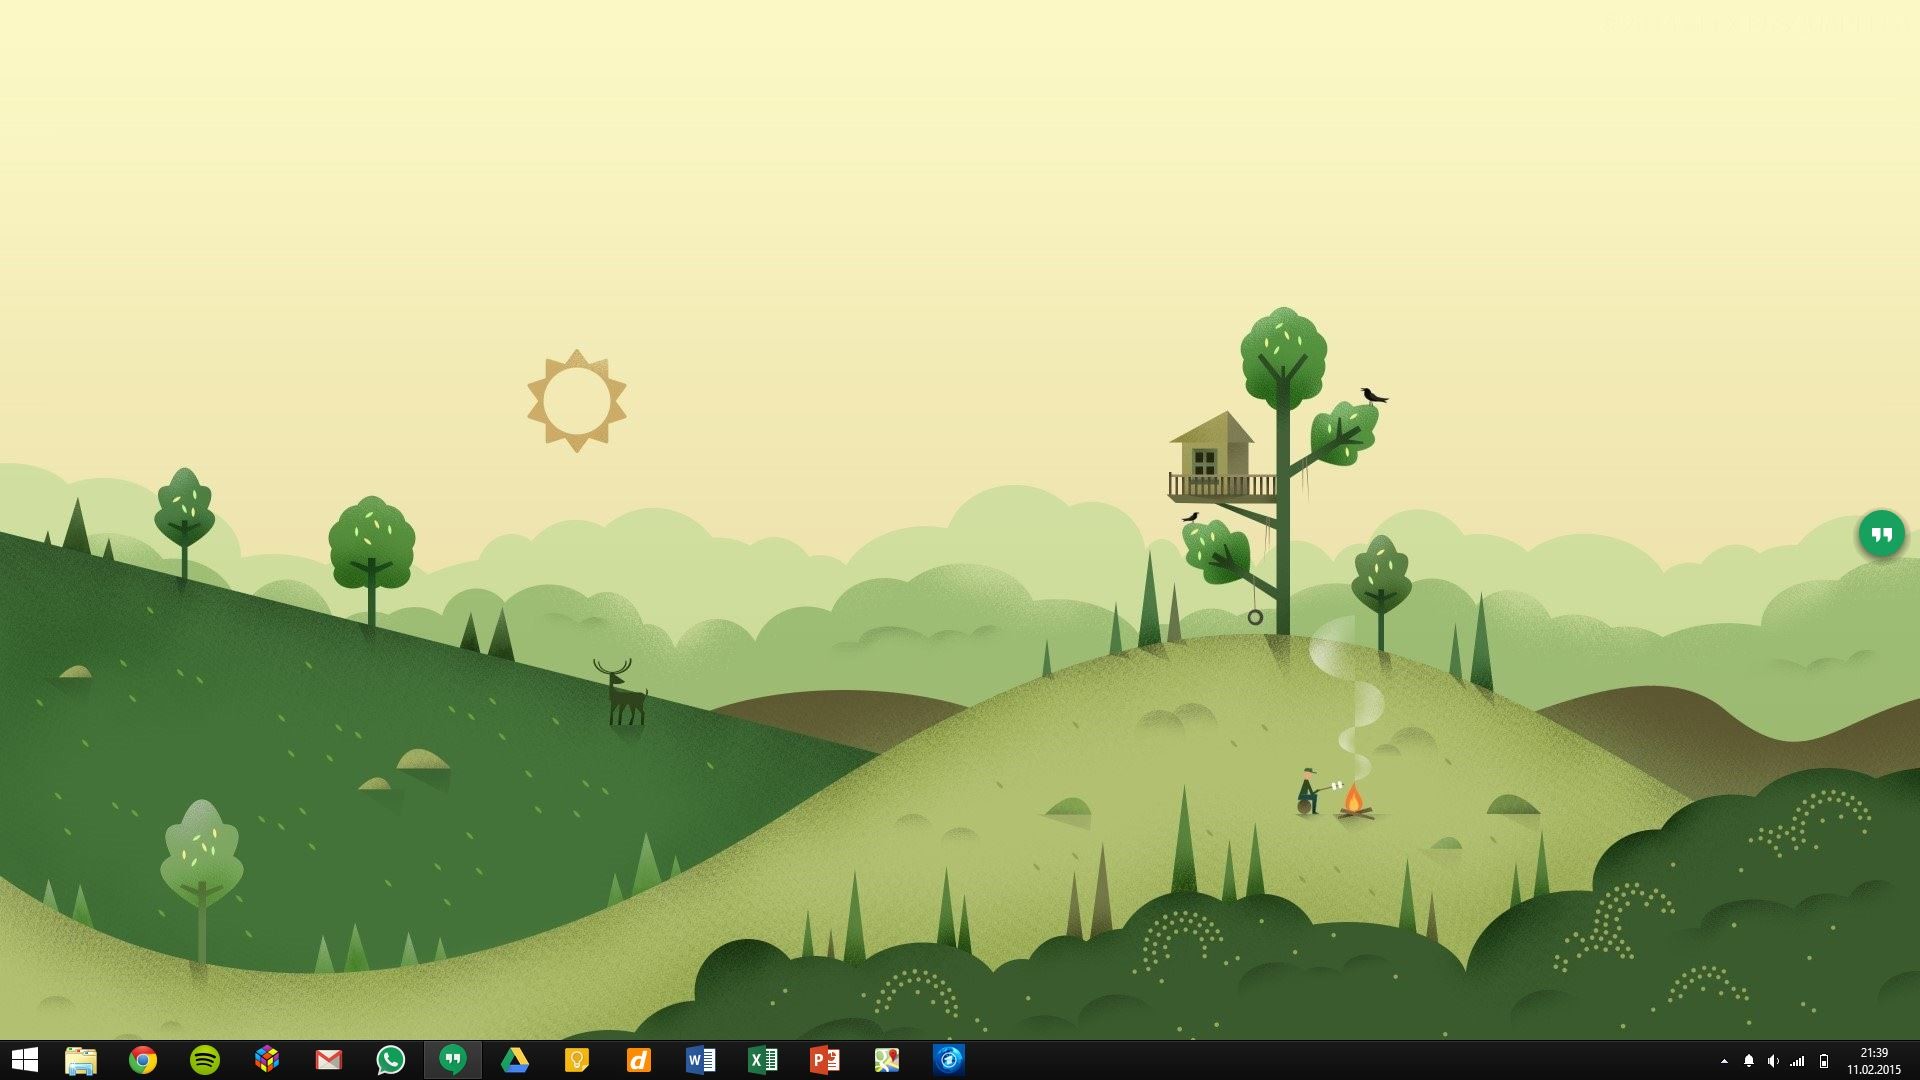 1920x1080 Simple desktop with Google Now inspired wallpaper. Original ...